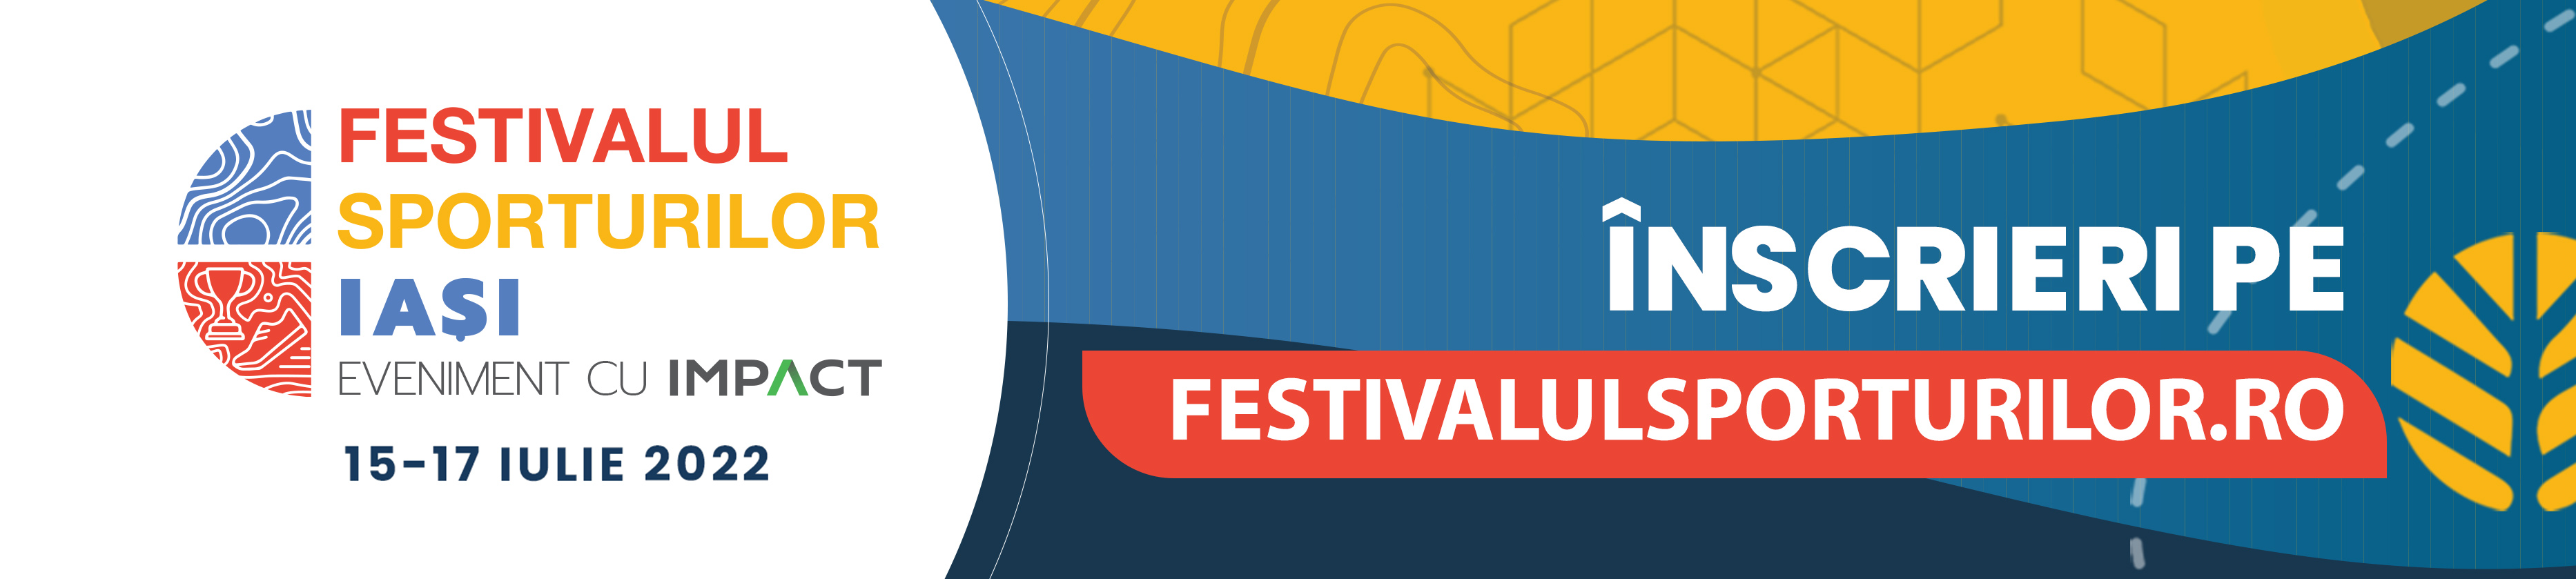 banner_inscrieri_festival